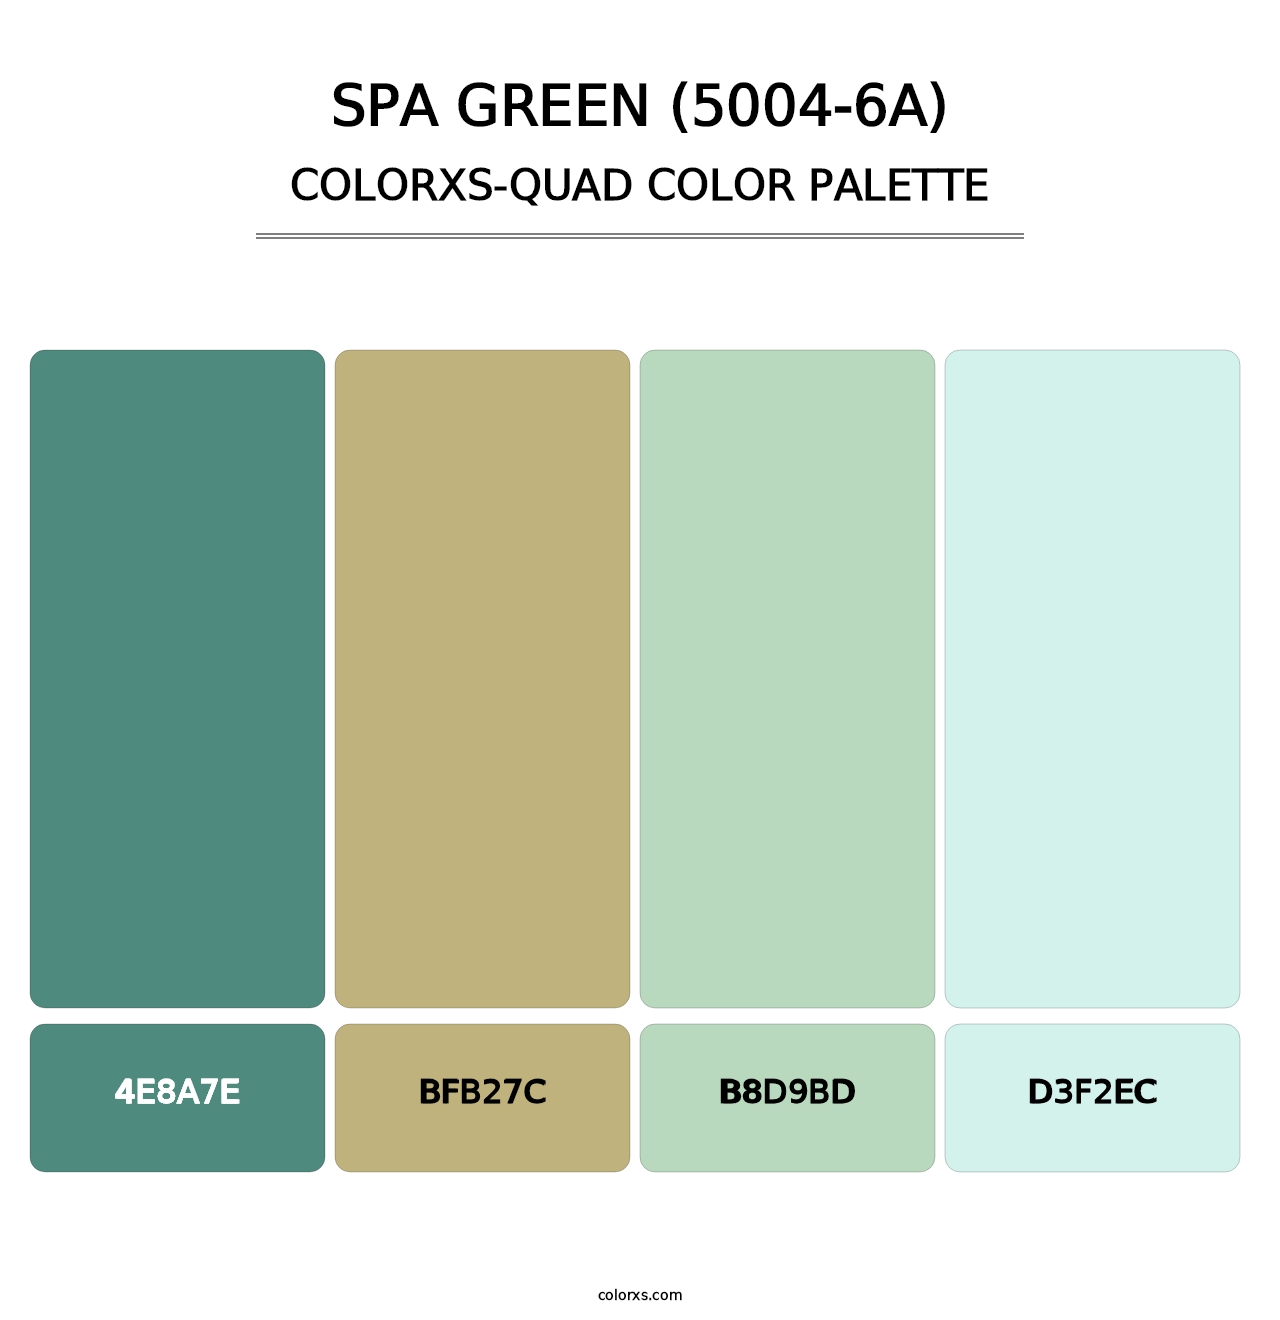 Spa Green (5004-6A) - Colorxs Quad Palette